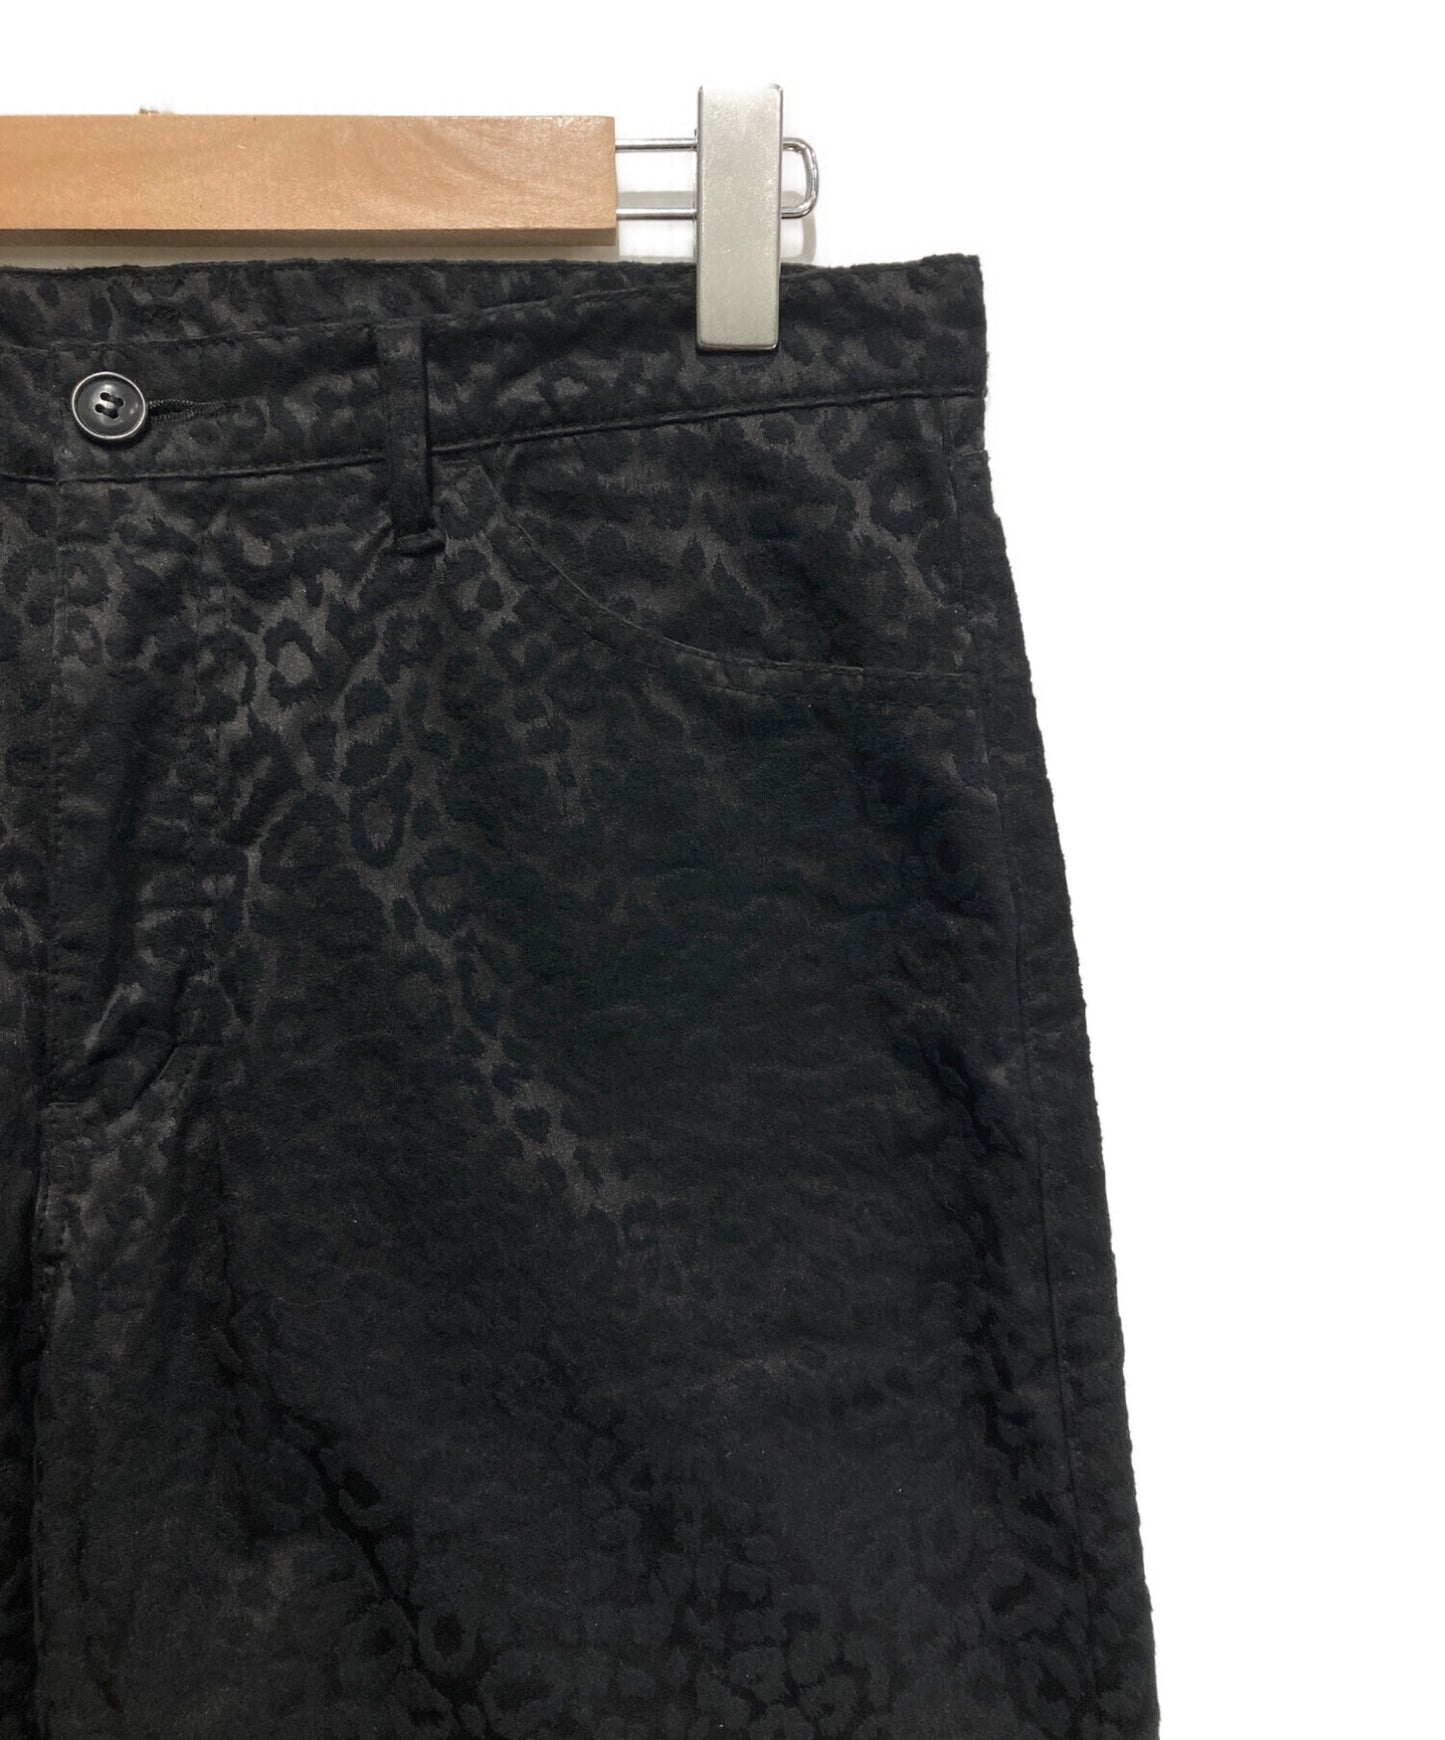 Black Comme des Garcons Leopard Pants/Slacks/Chinos/Pants ที่มีทั่วทั้งรูปแบบ 1N-P010